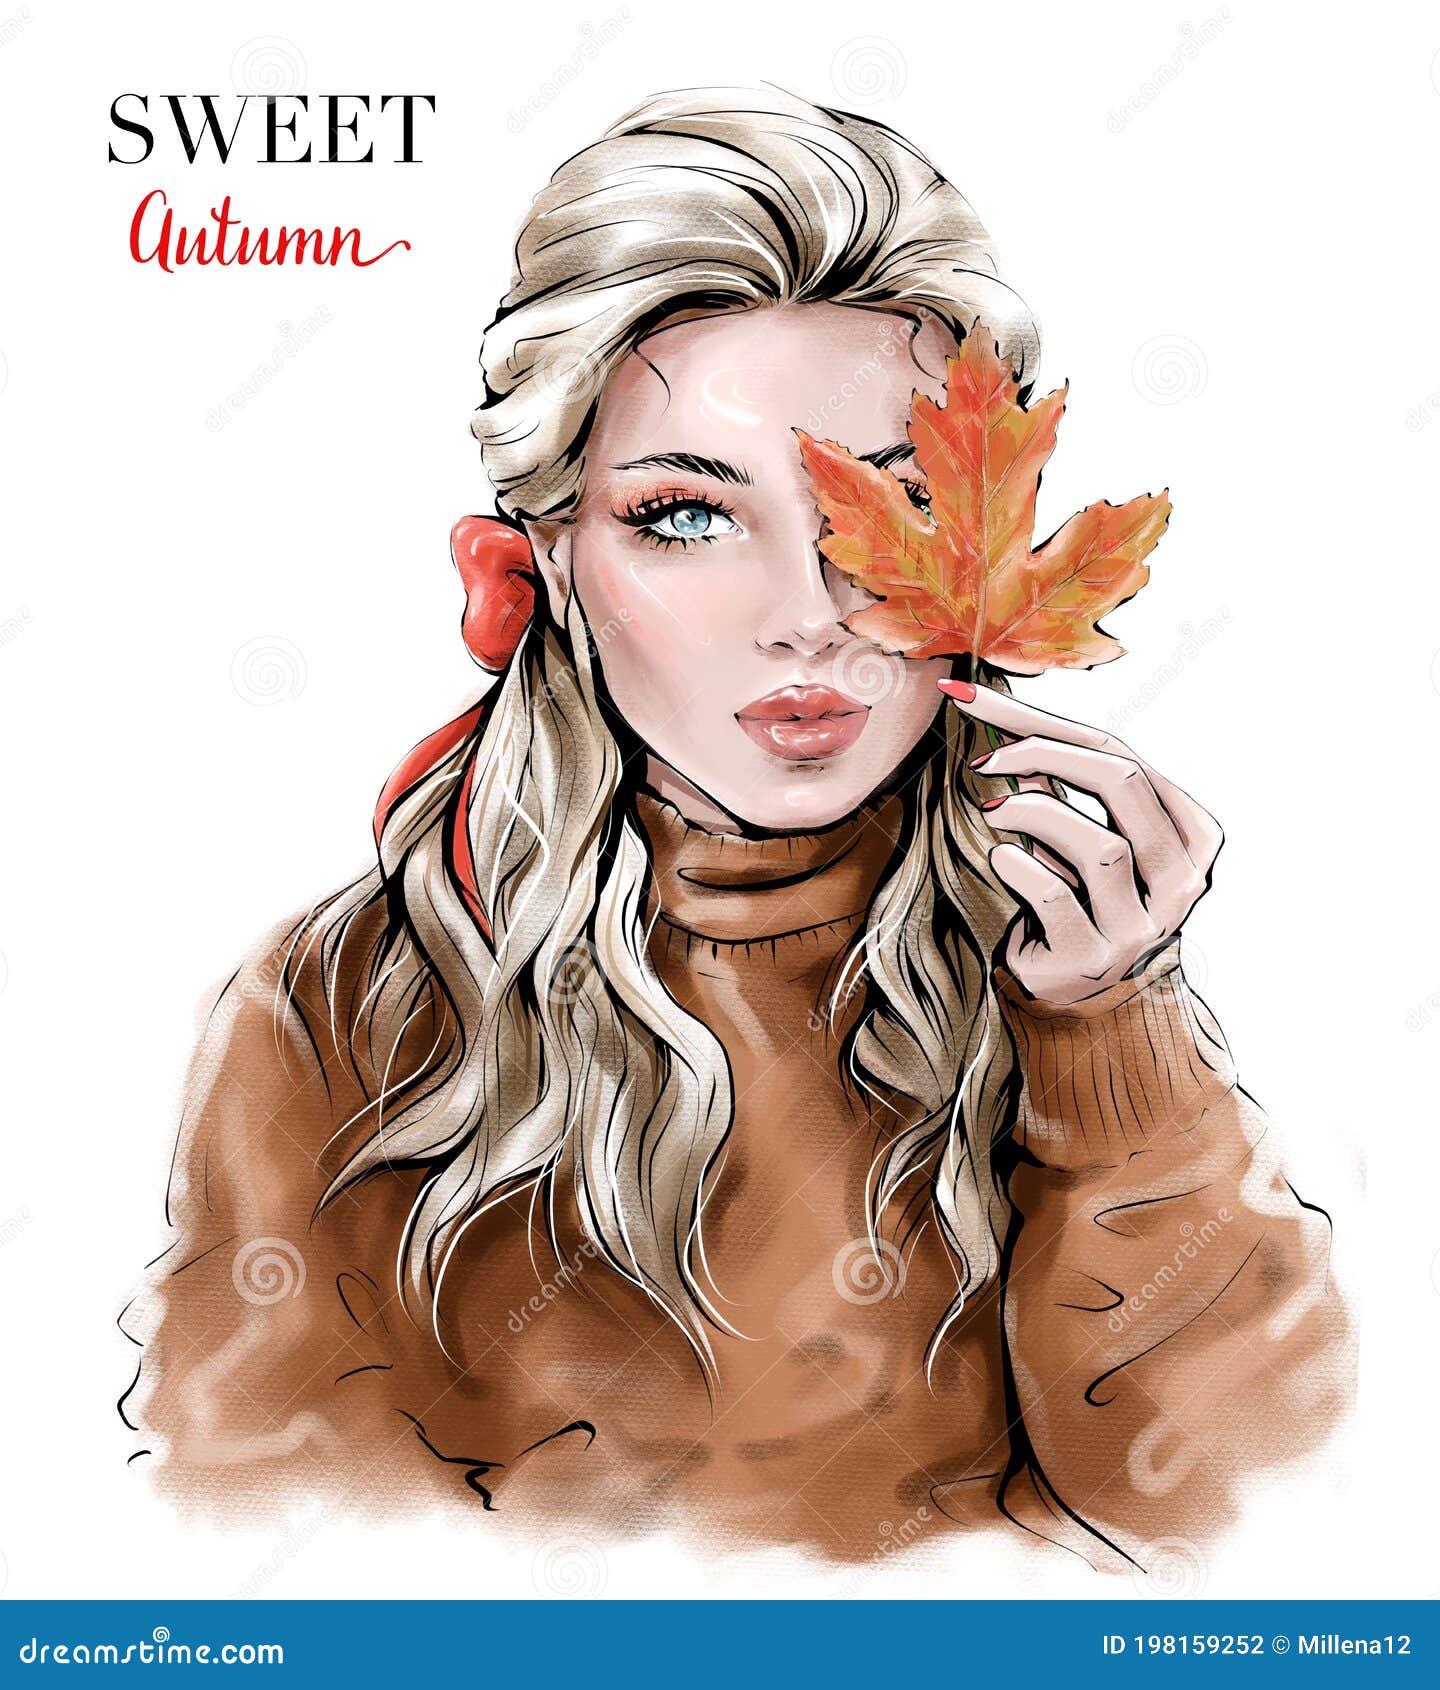 https://thumbs.dreamstime.com/z/hand-drawn-beautiful-young-woman-autumn-leaf-fashion-illustration-198159252.jpg